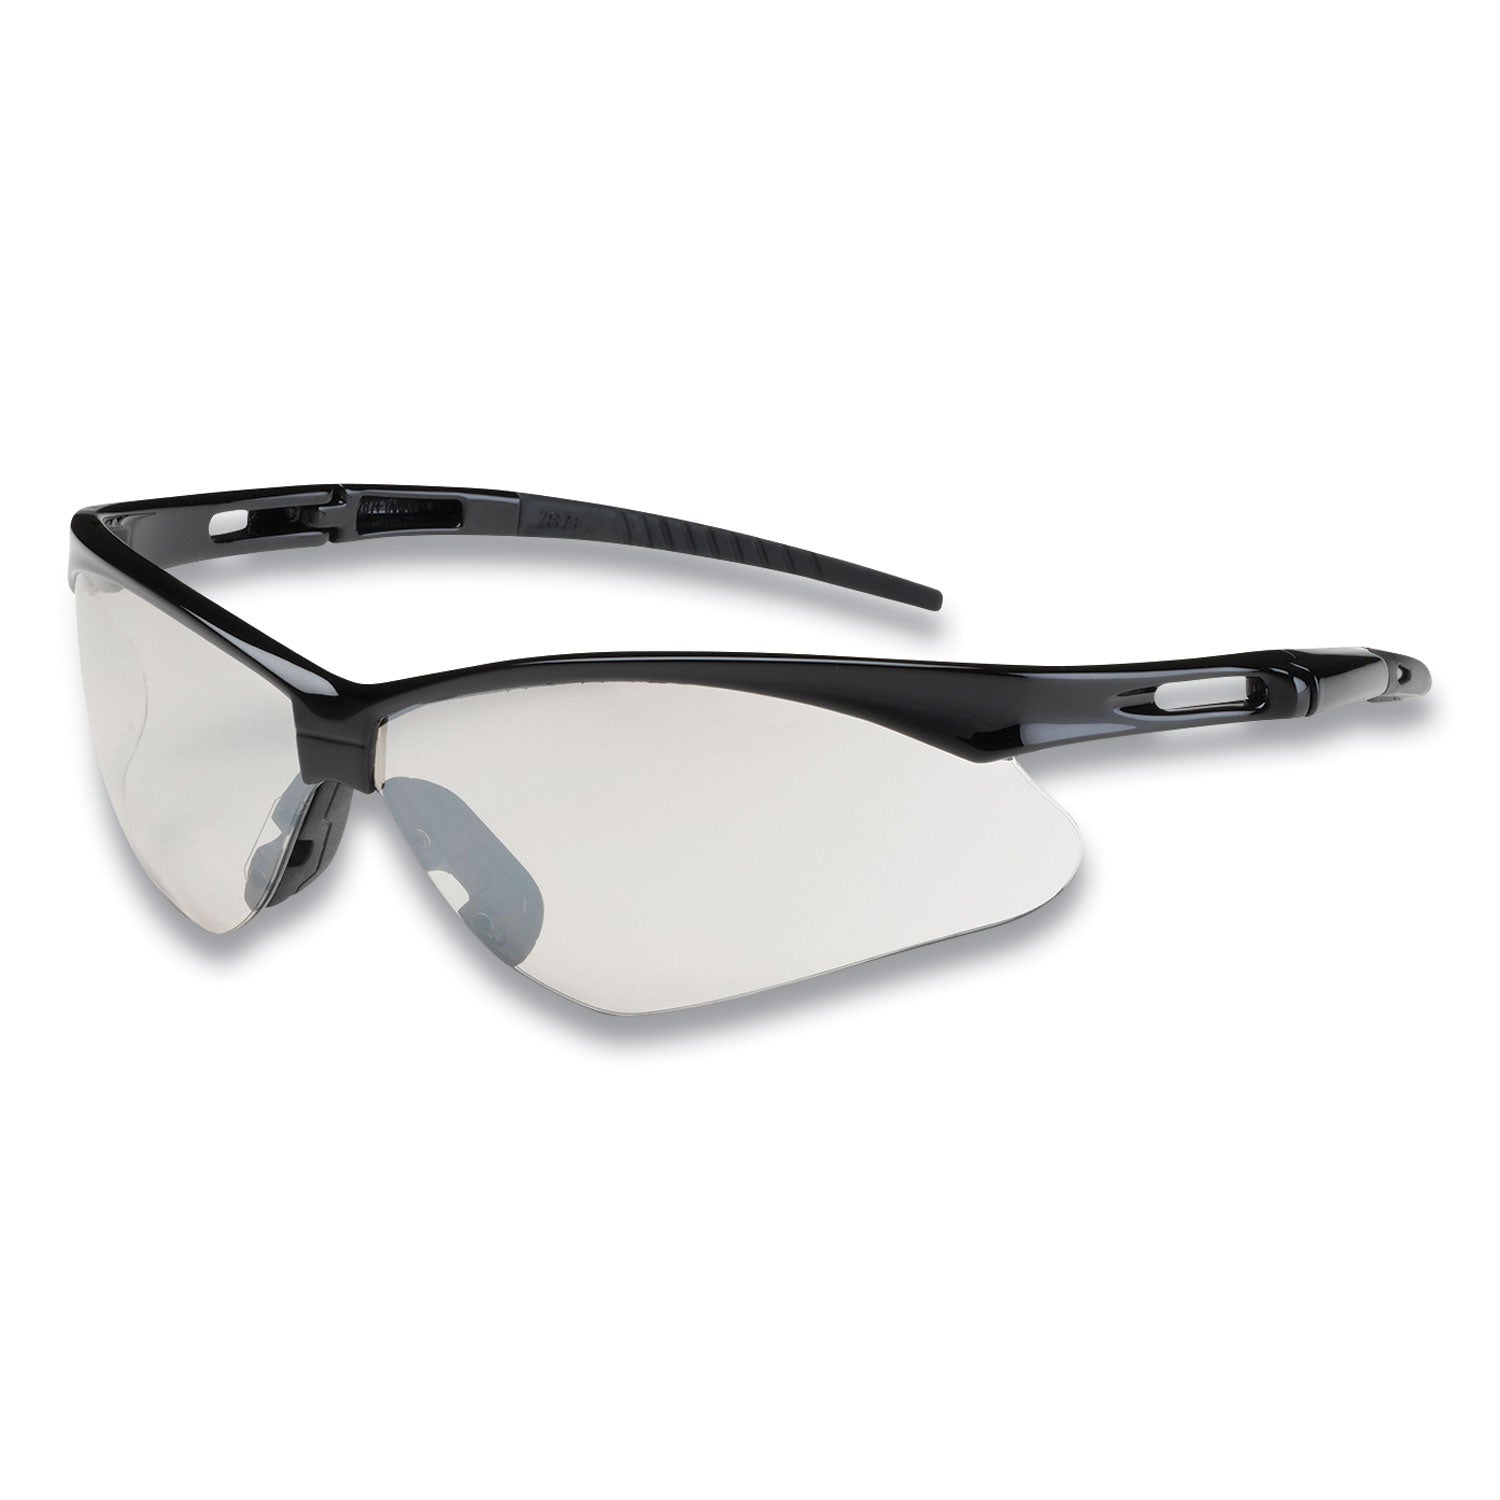 anser-optical-safety-glasses-scratch-resistant-clear-lens-black-frame_bou250an10114 - 1